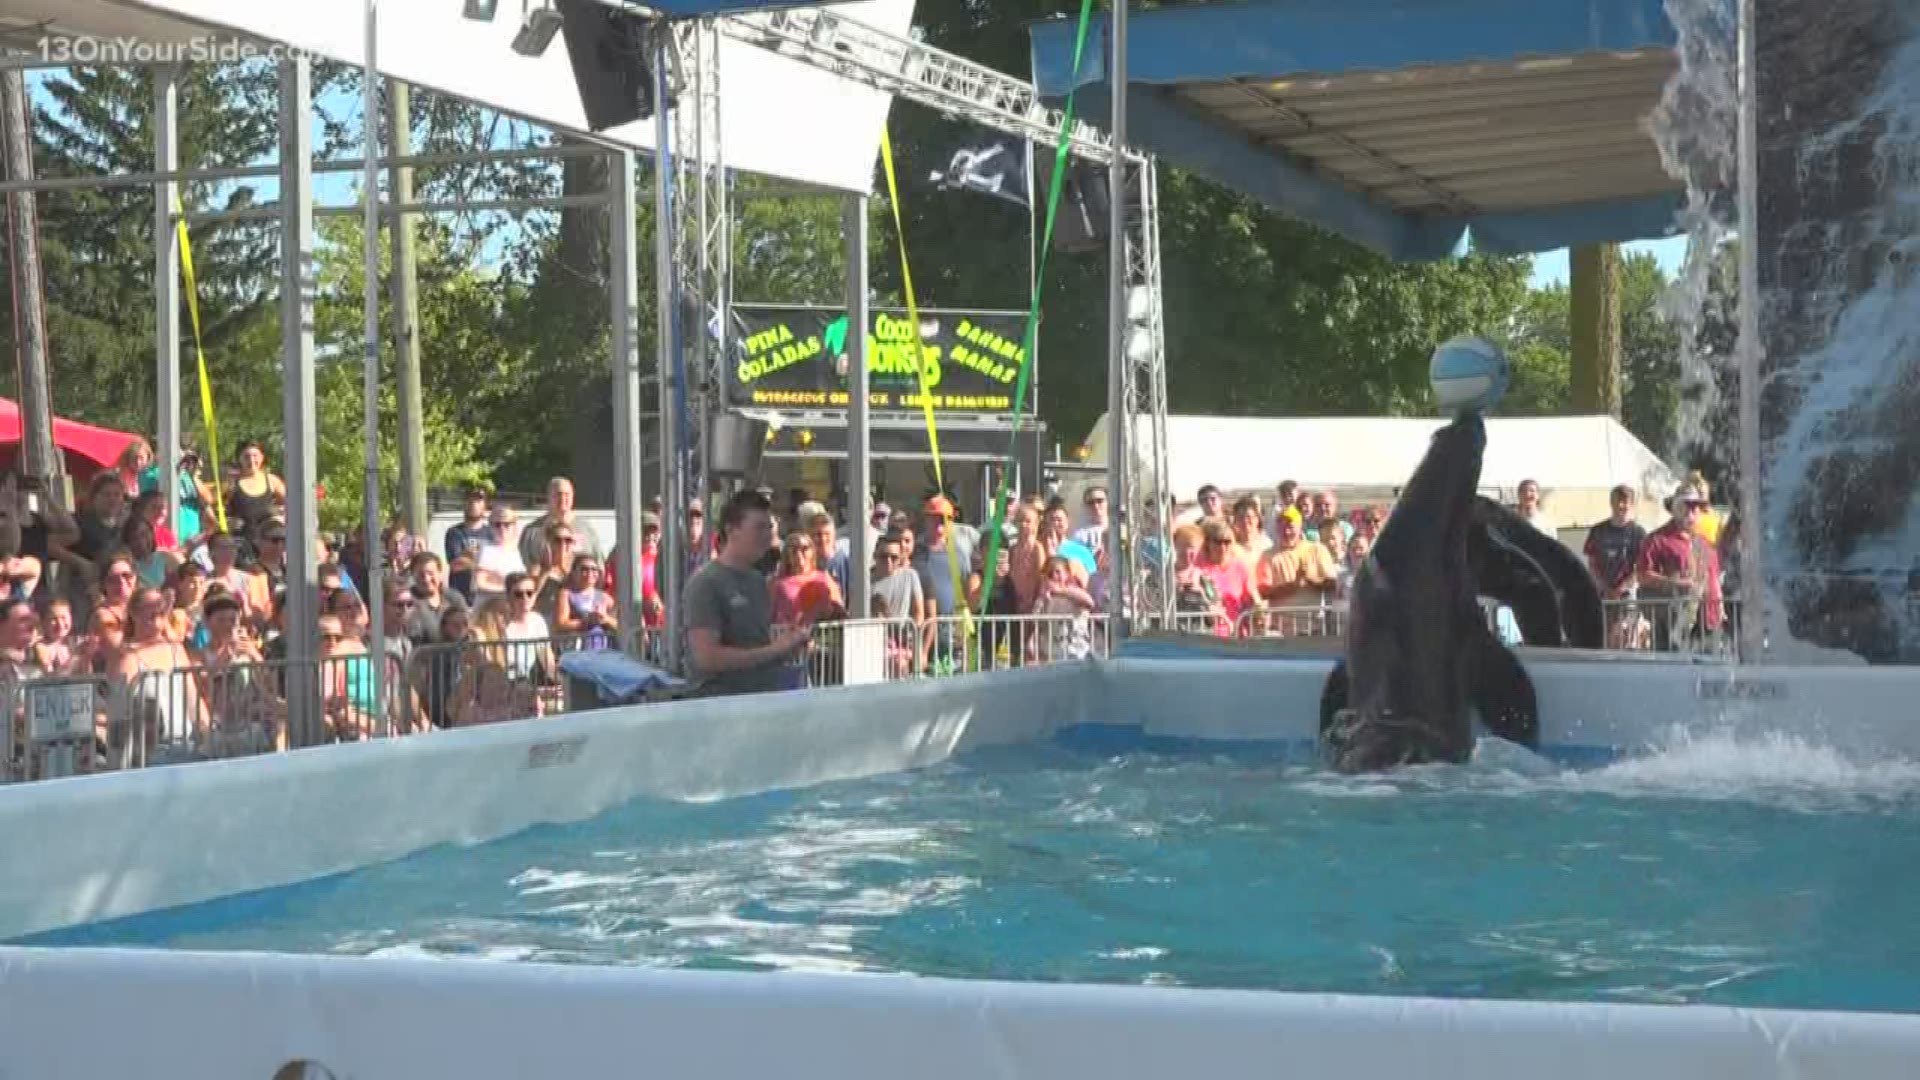 Sea lions make a big splash at Ionia Free Fair